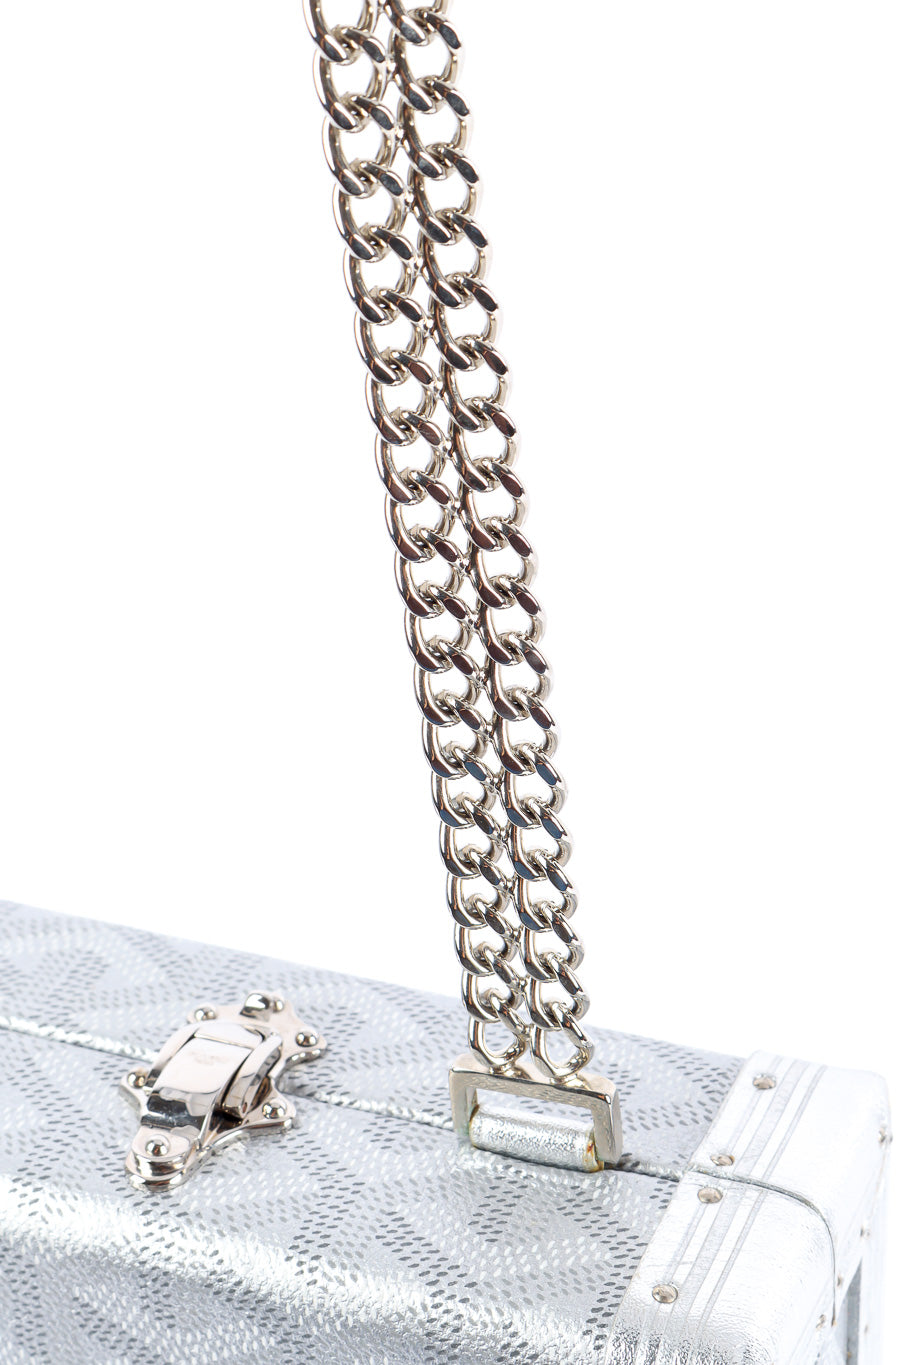 Goyard saint-honoré trunk bag chain detail @recessla